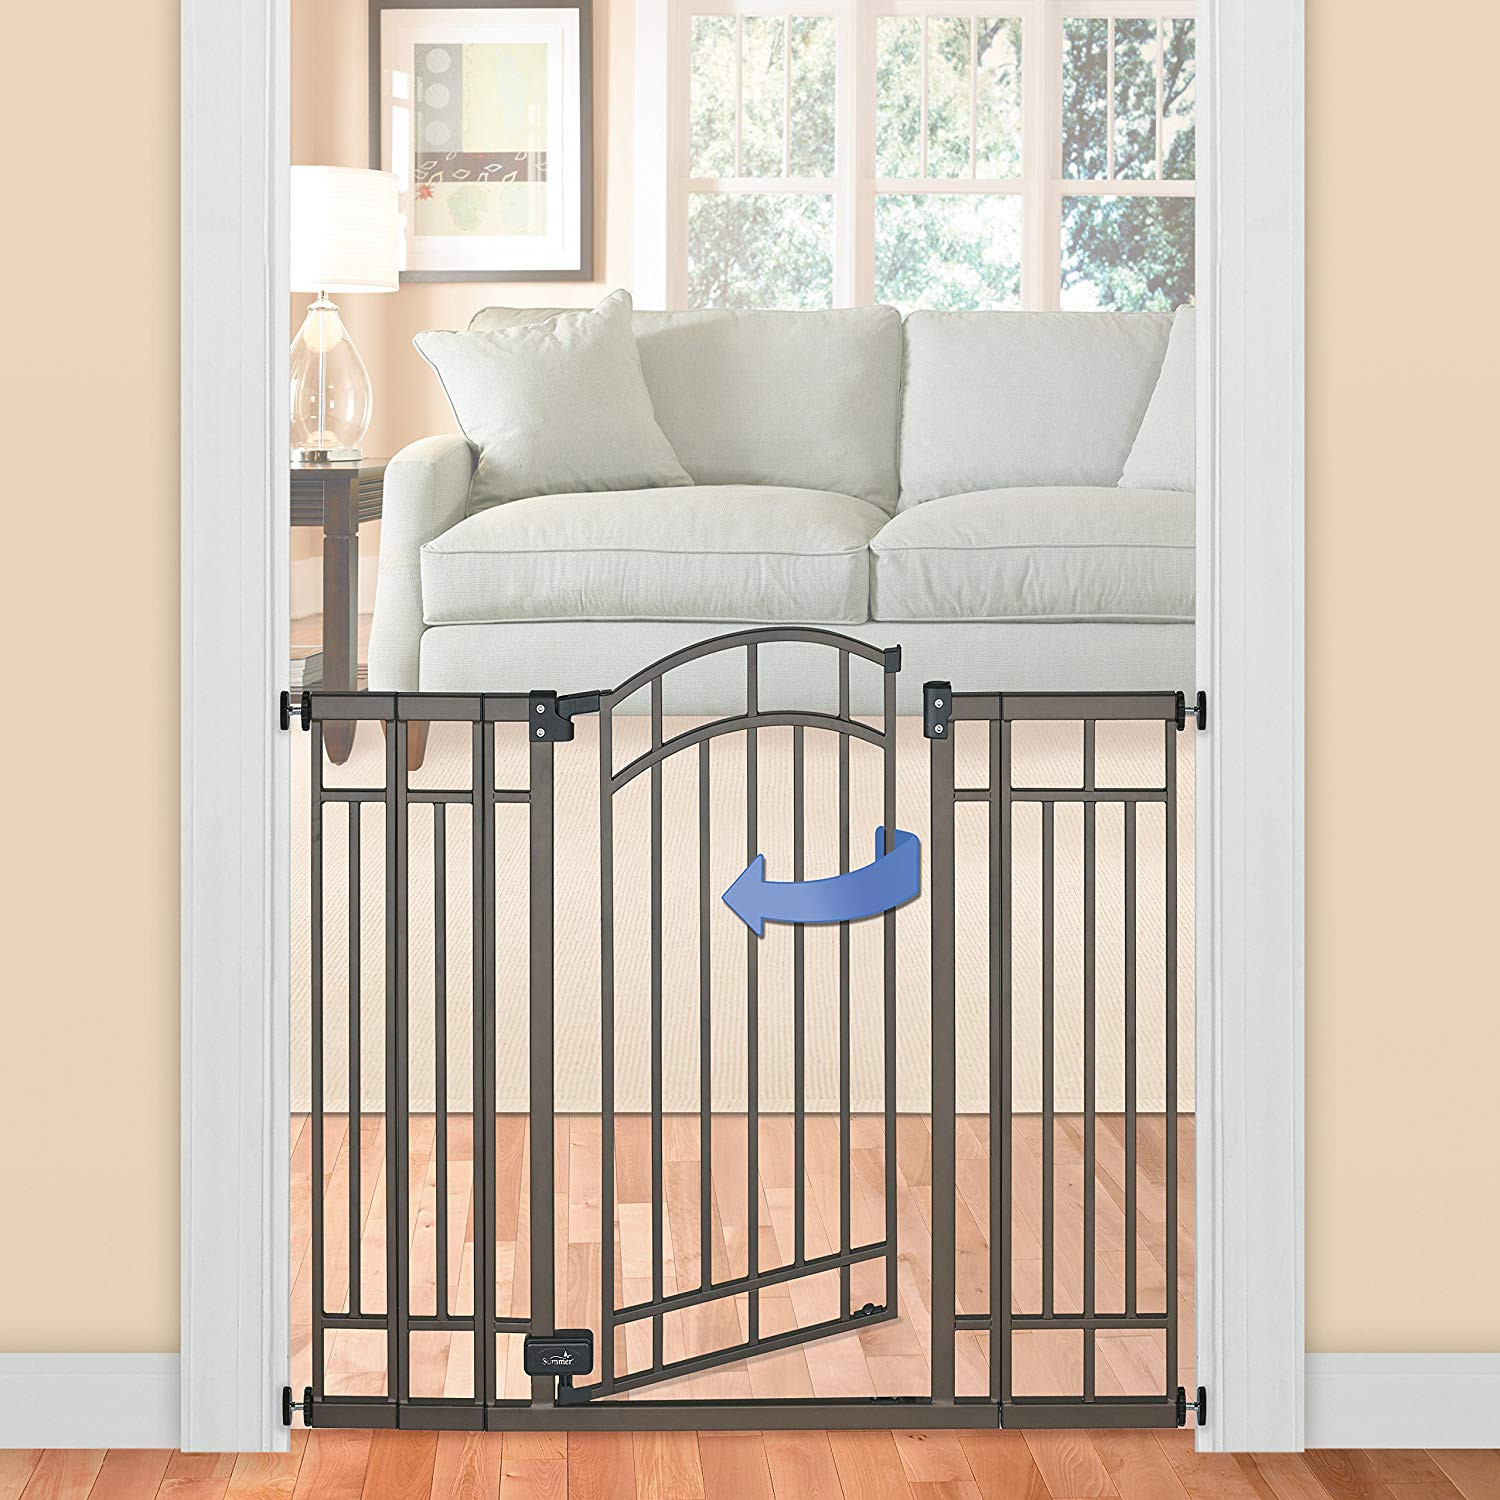 Summer Infant Home Decor Safety Gate
 Check Summer Infant Decorative Extra Tall Walk Thru Gate